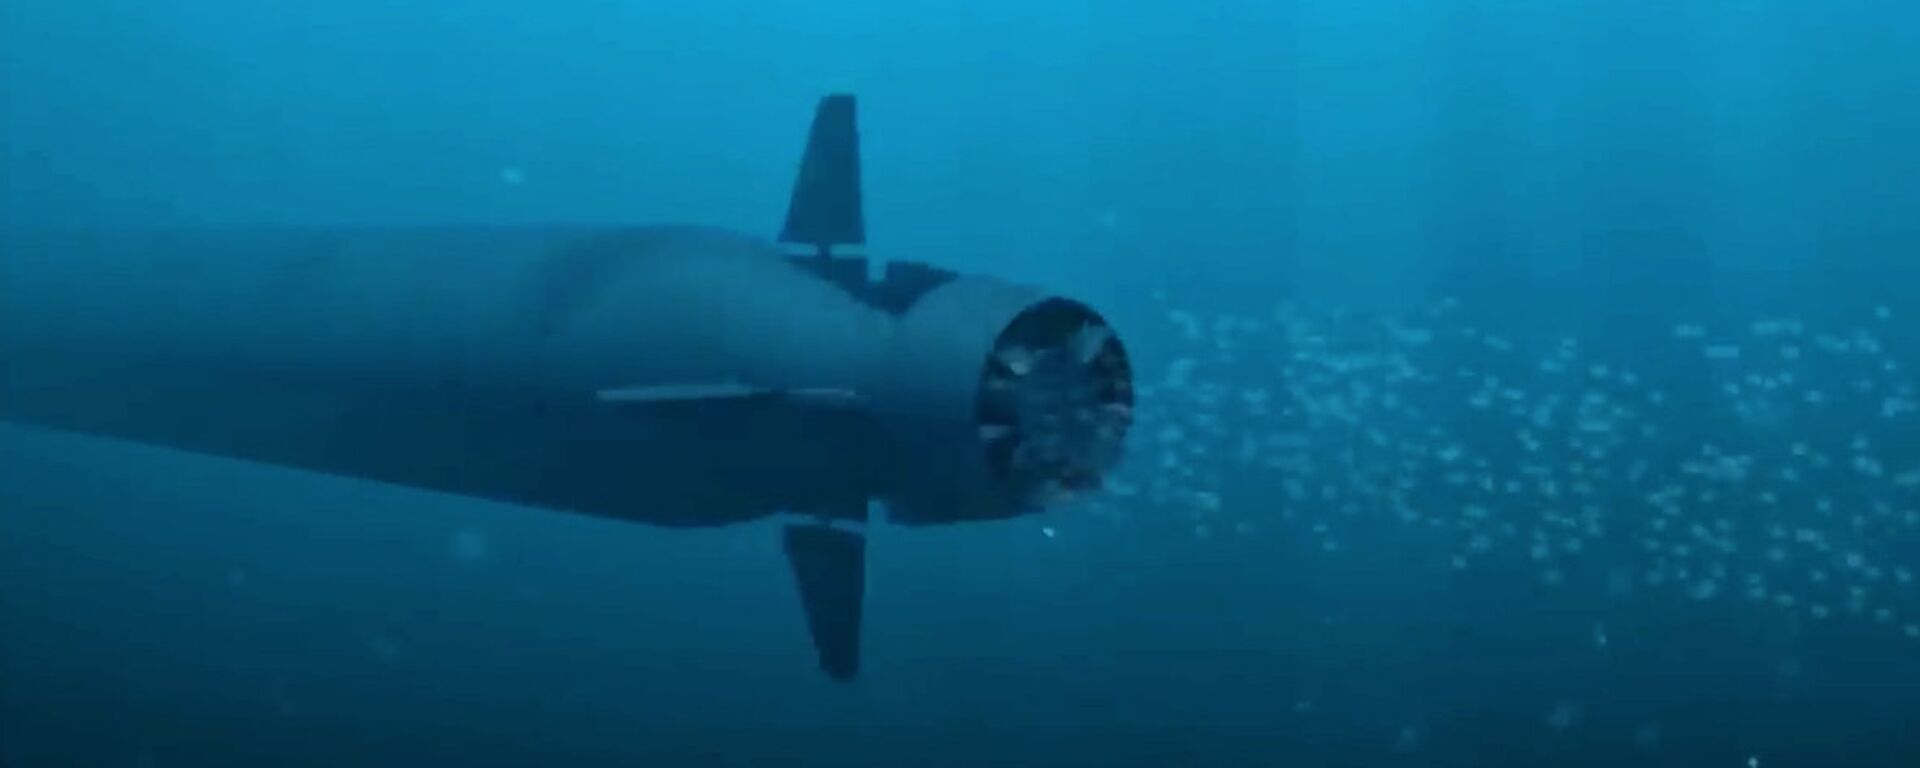 Poseidon, dron submarino ruso - Sputnik Mundo, 1920, 02.05.2021